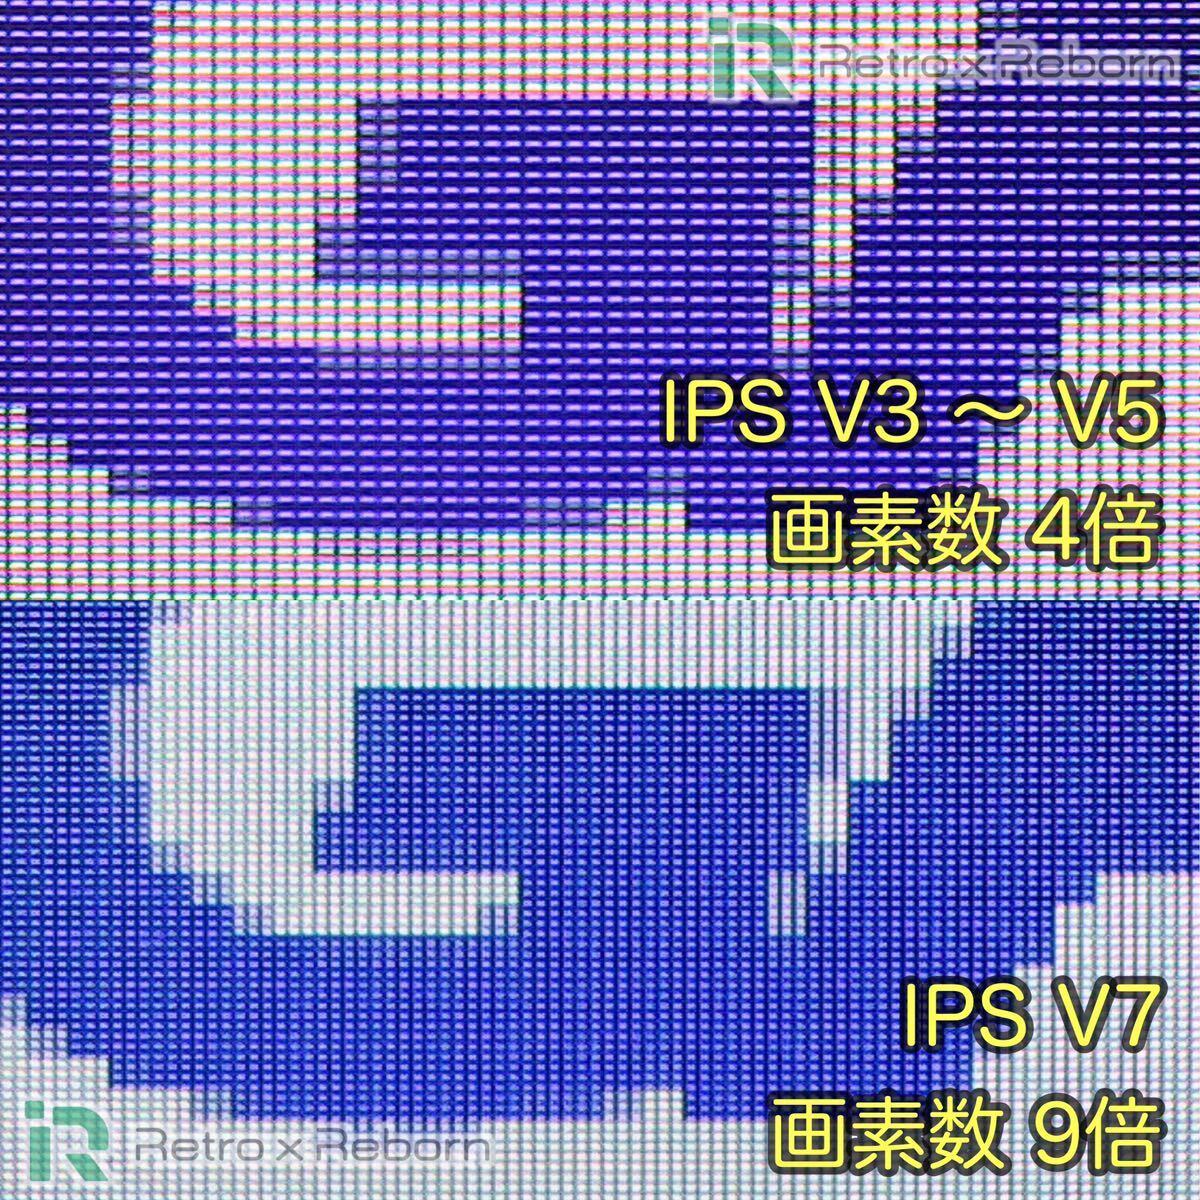  Game Boy Advance корпус IPS V7 подсветка жидкокристаллический установка 063